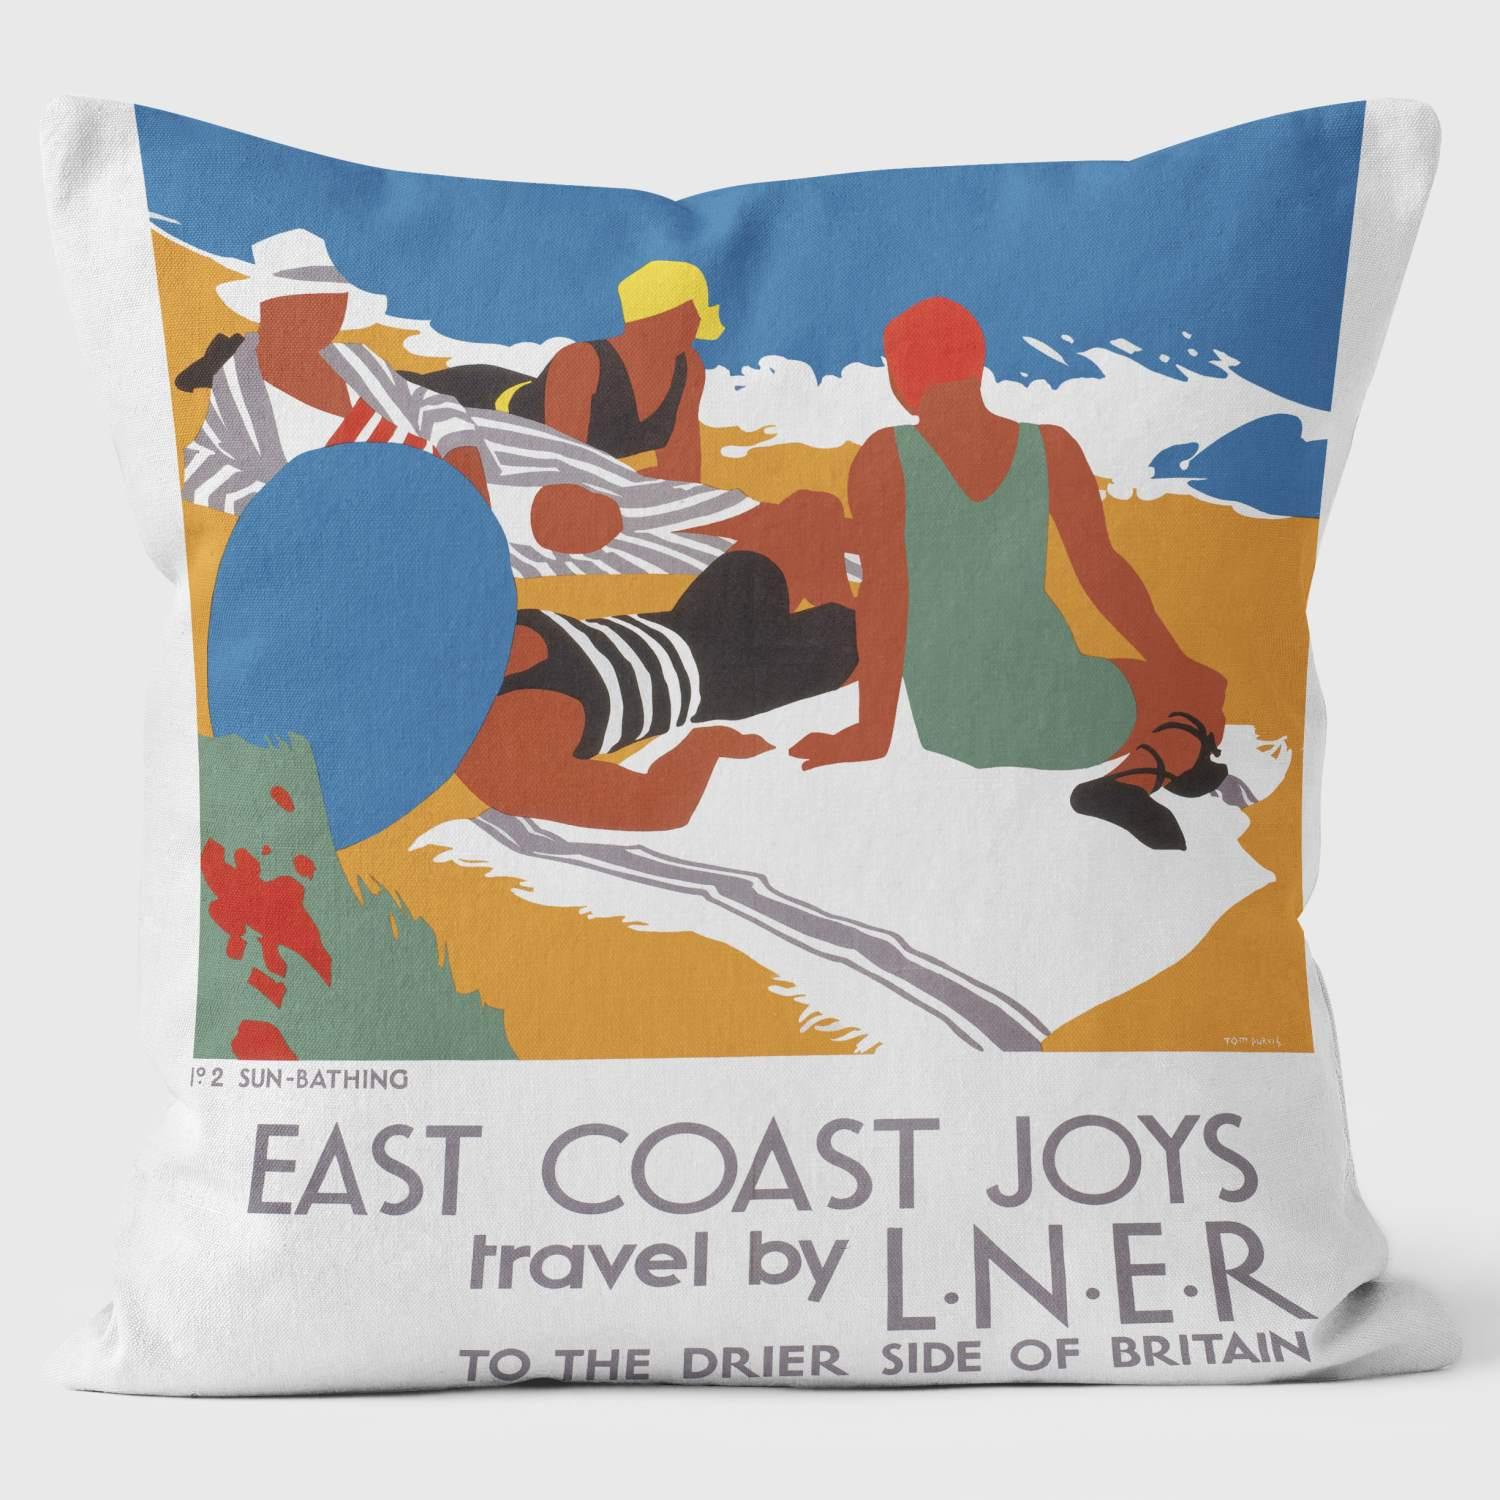 East Coast Joys No 2 - Sun-Bathing’ LNER 1931 - National Railway Museum Cushion - Handmade Cushions UK - WeLoveCushions